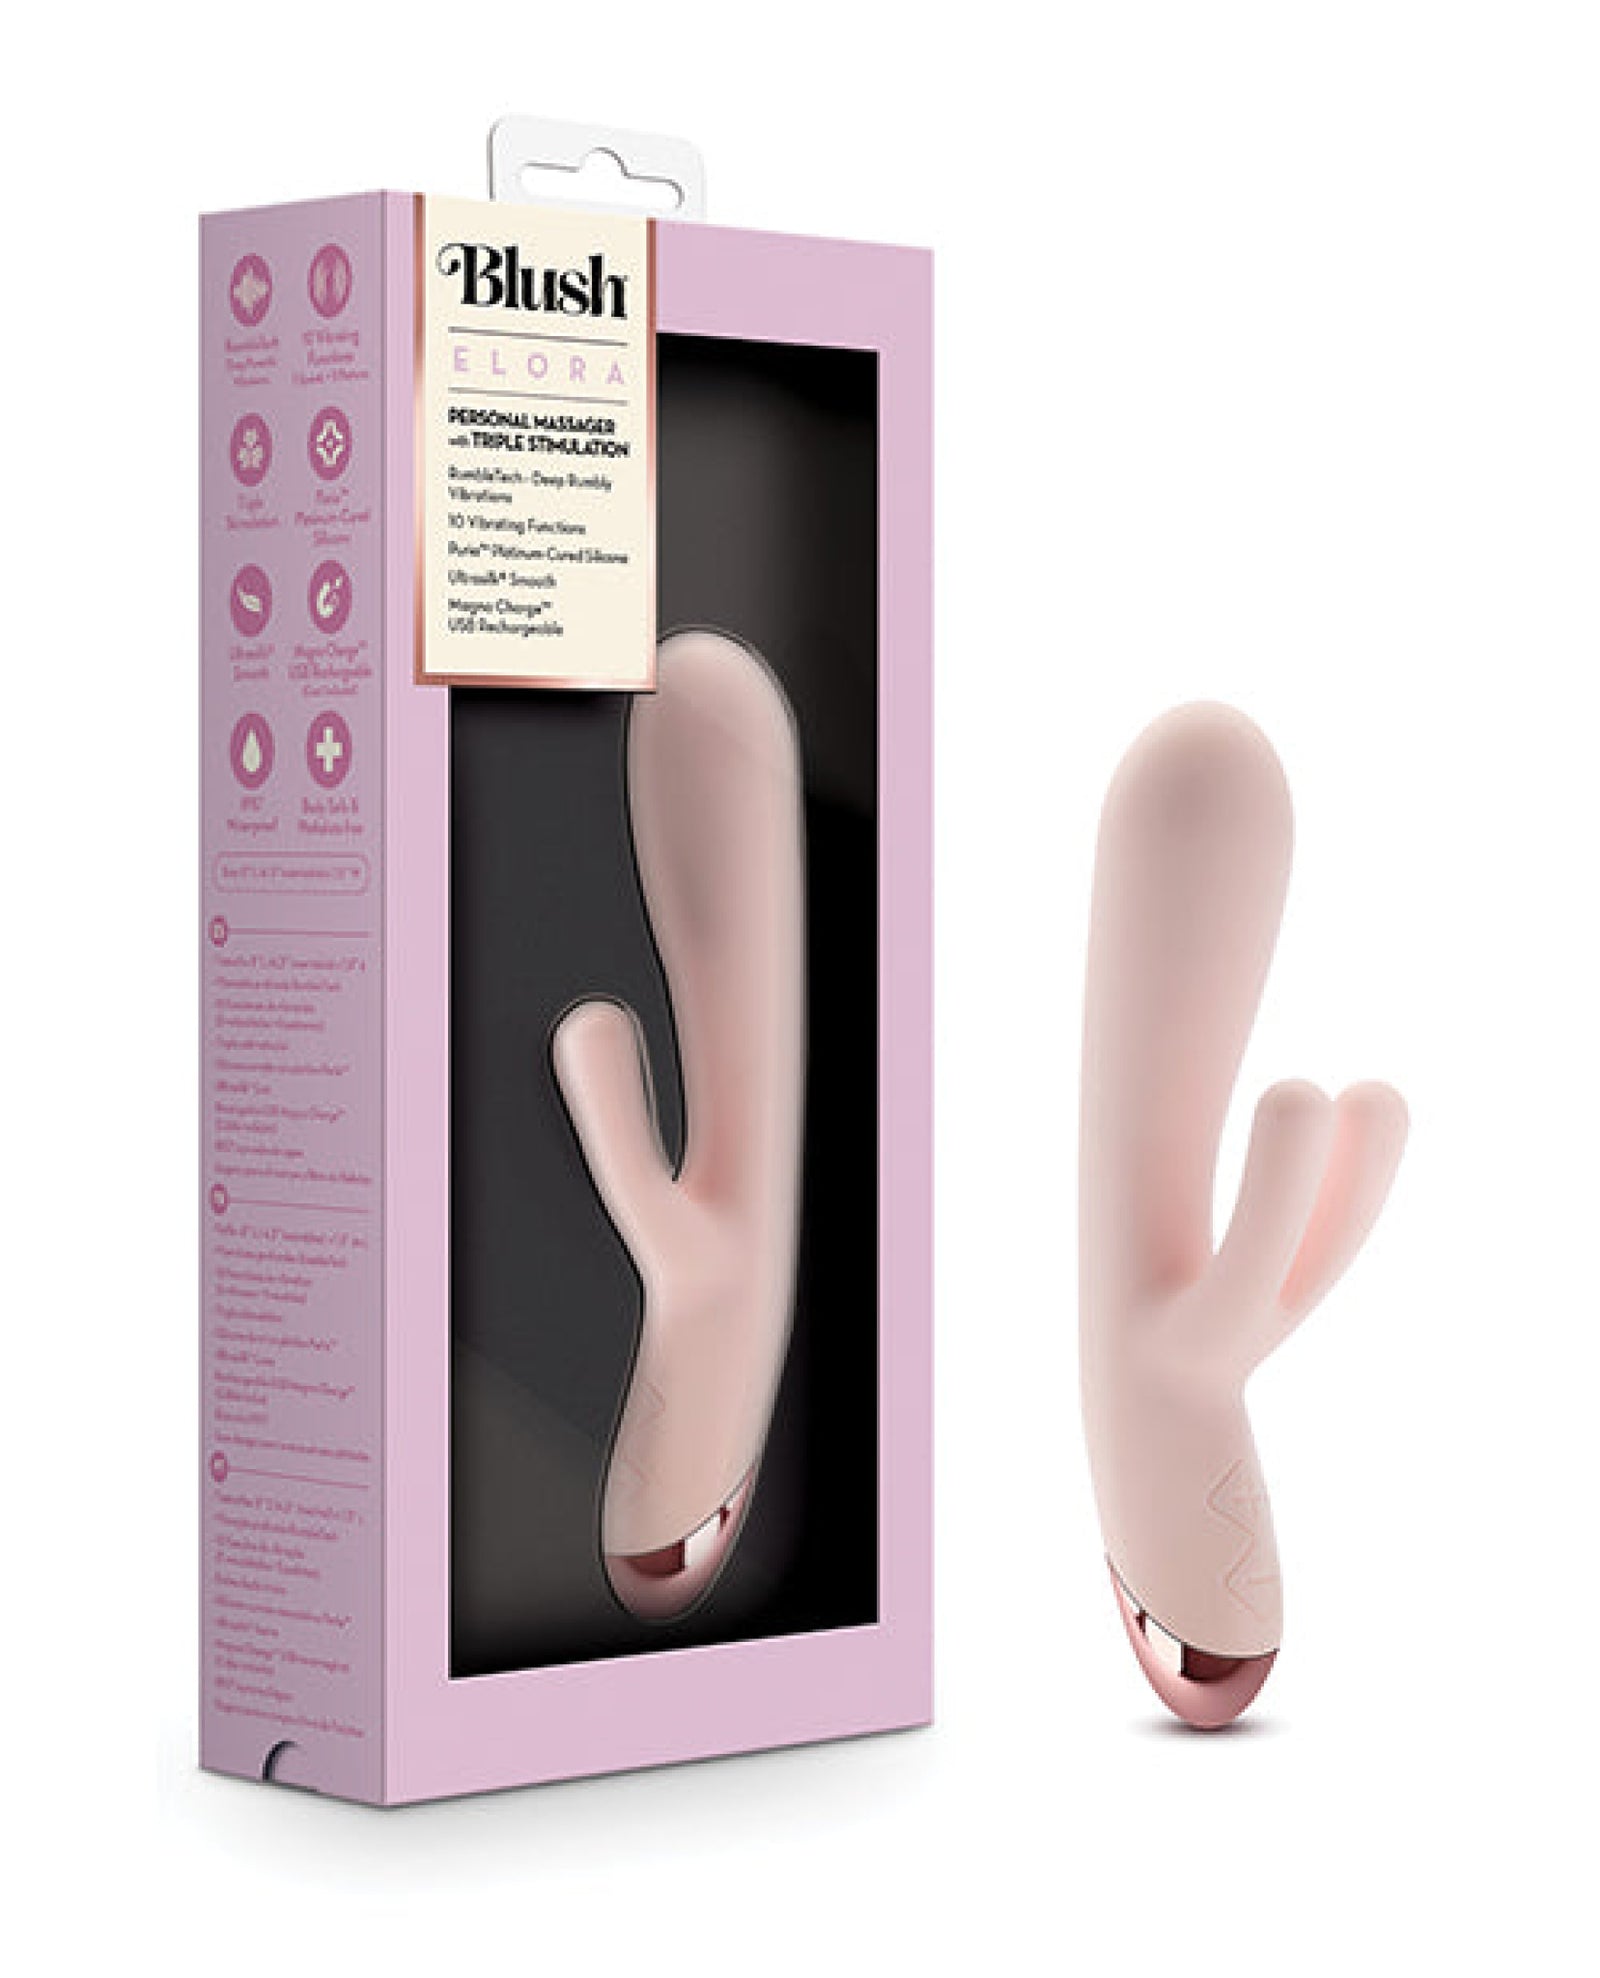 Blush Elora Rabbit Vibrator - Pink Blush